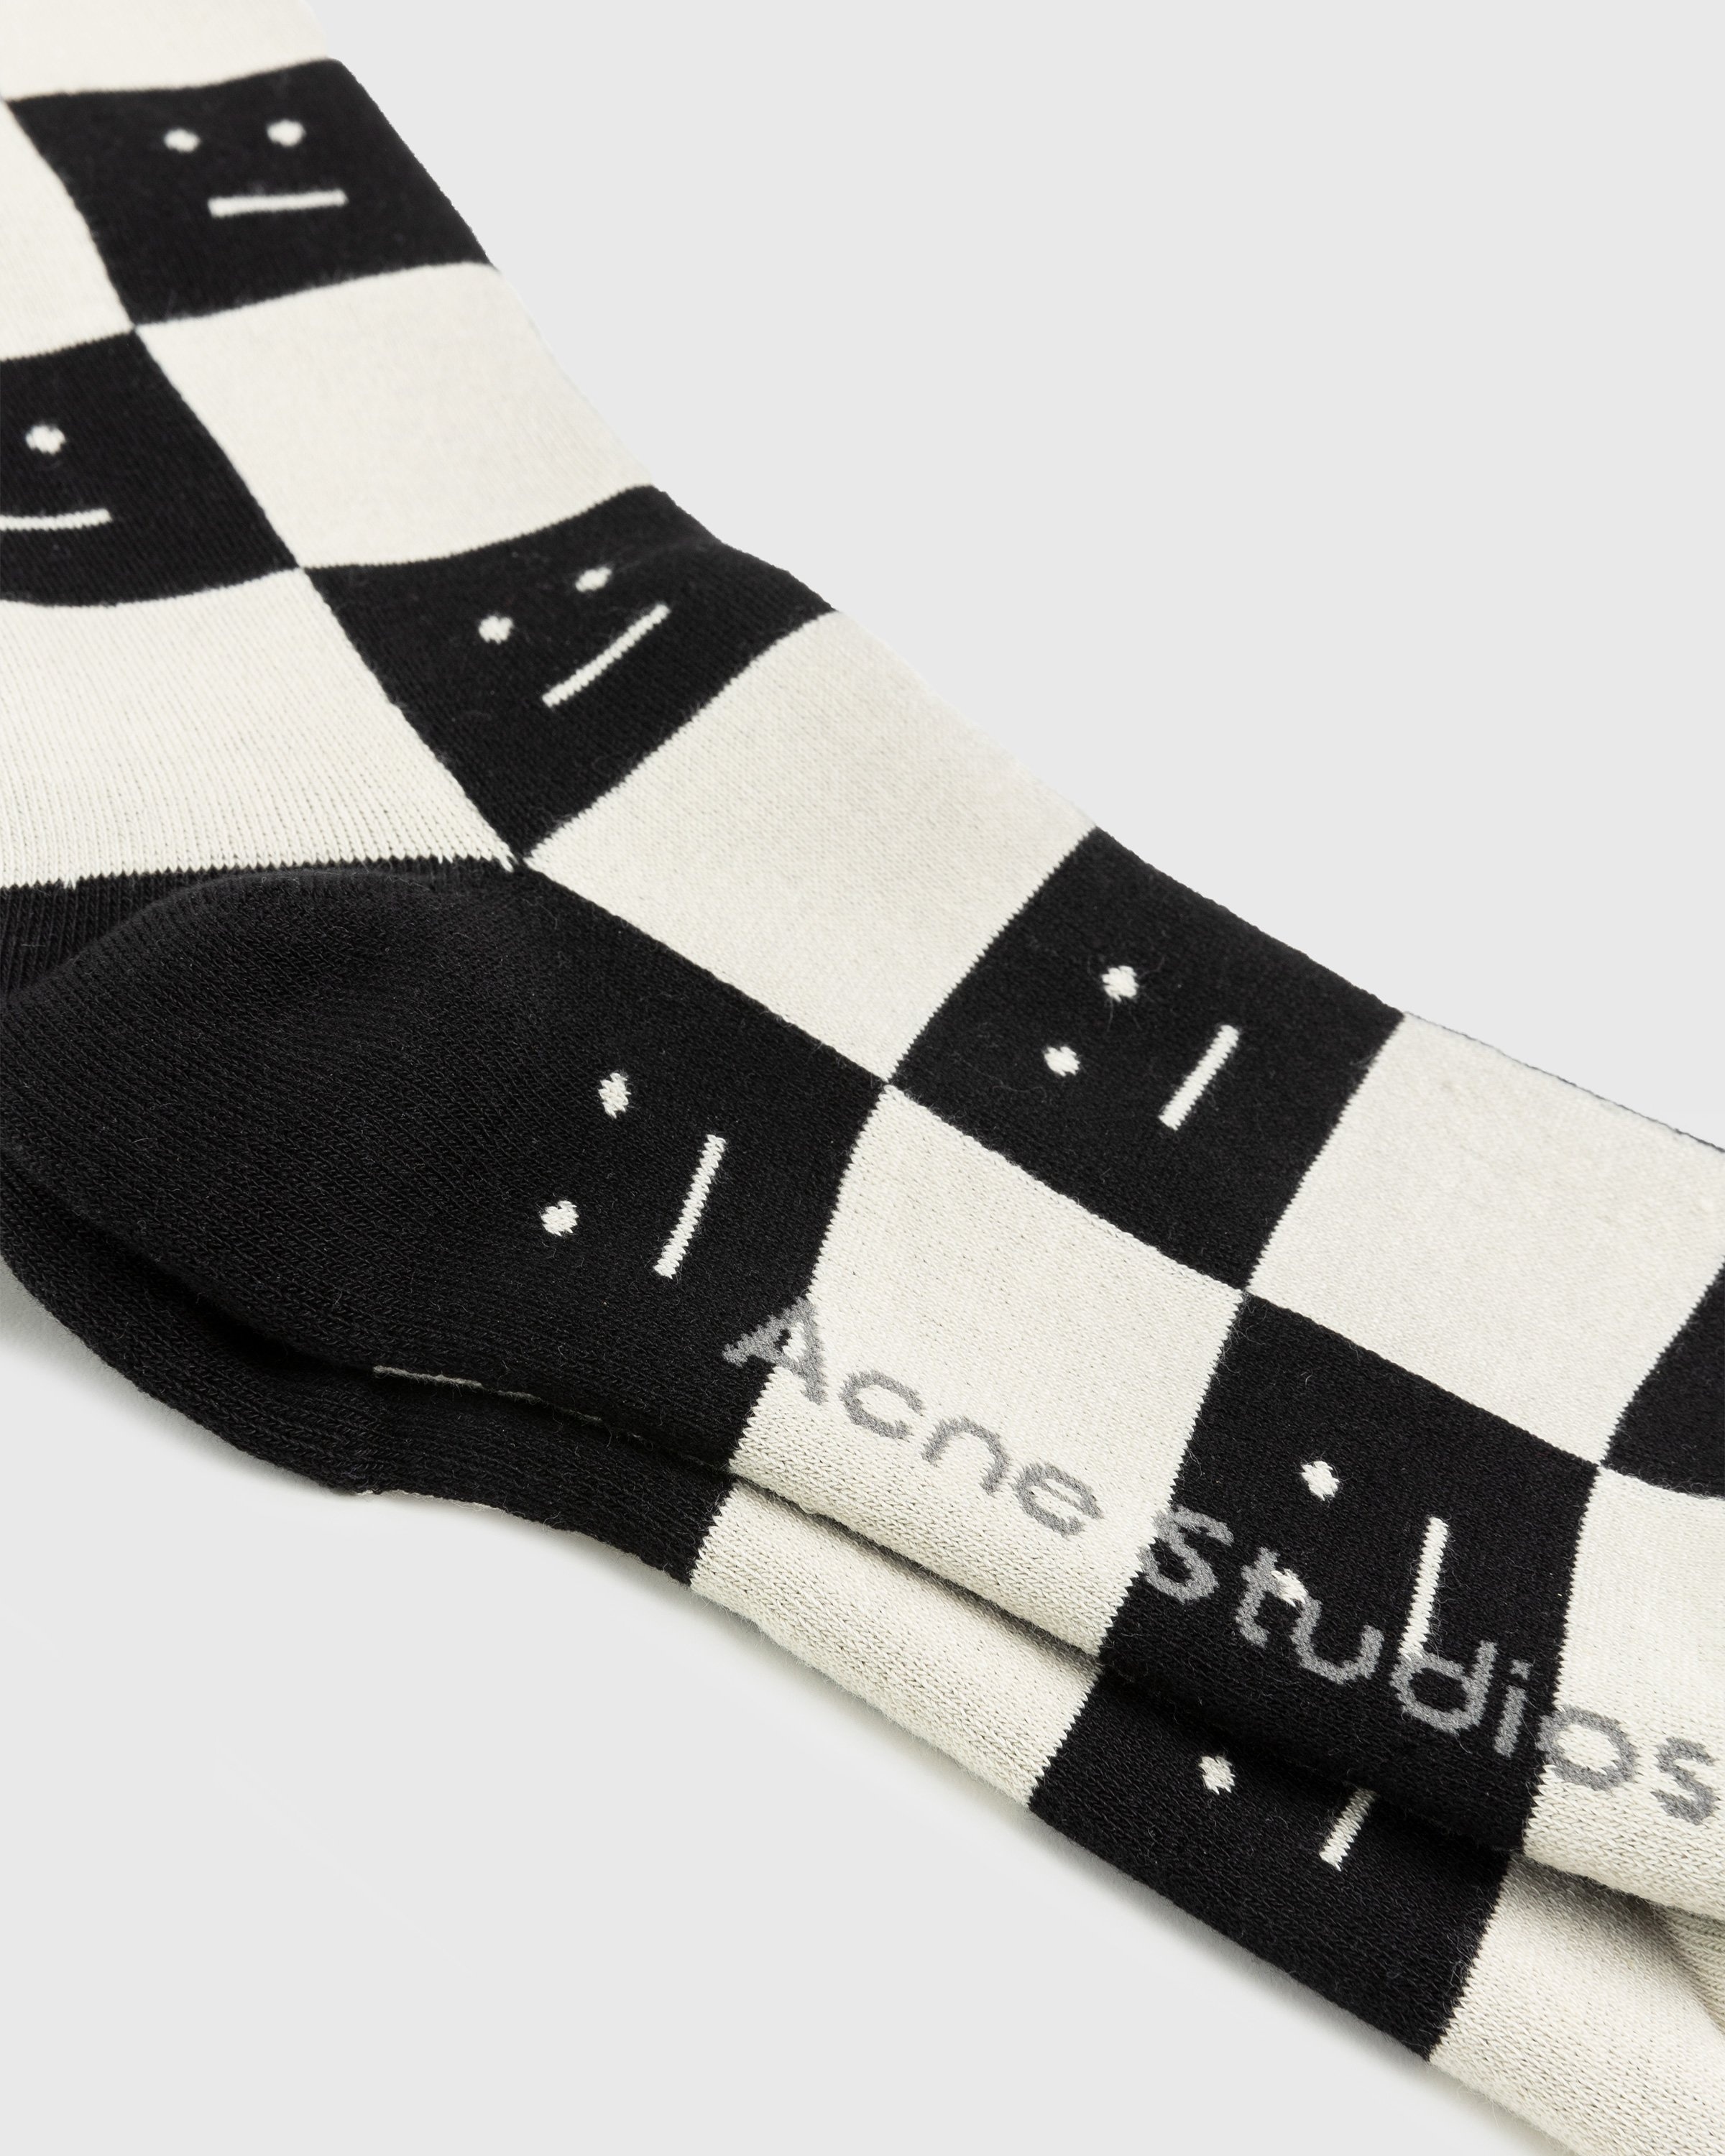 Acne Studios – Checkerboard Socks Black/Oatmeal Beige - Socks - Black - Image 3